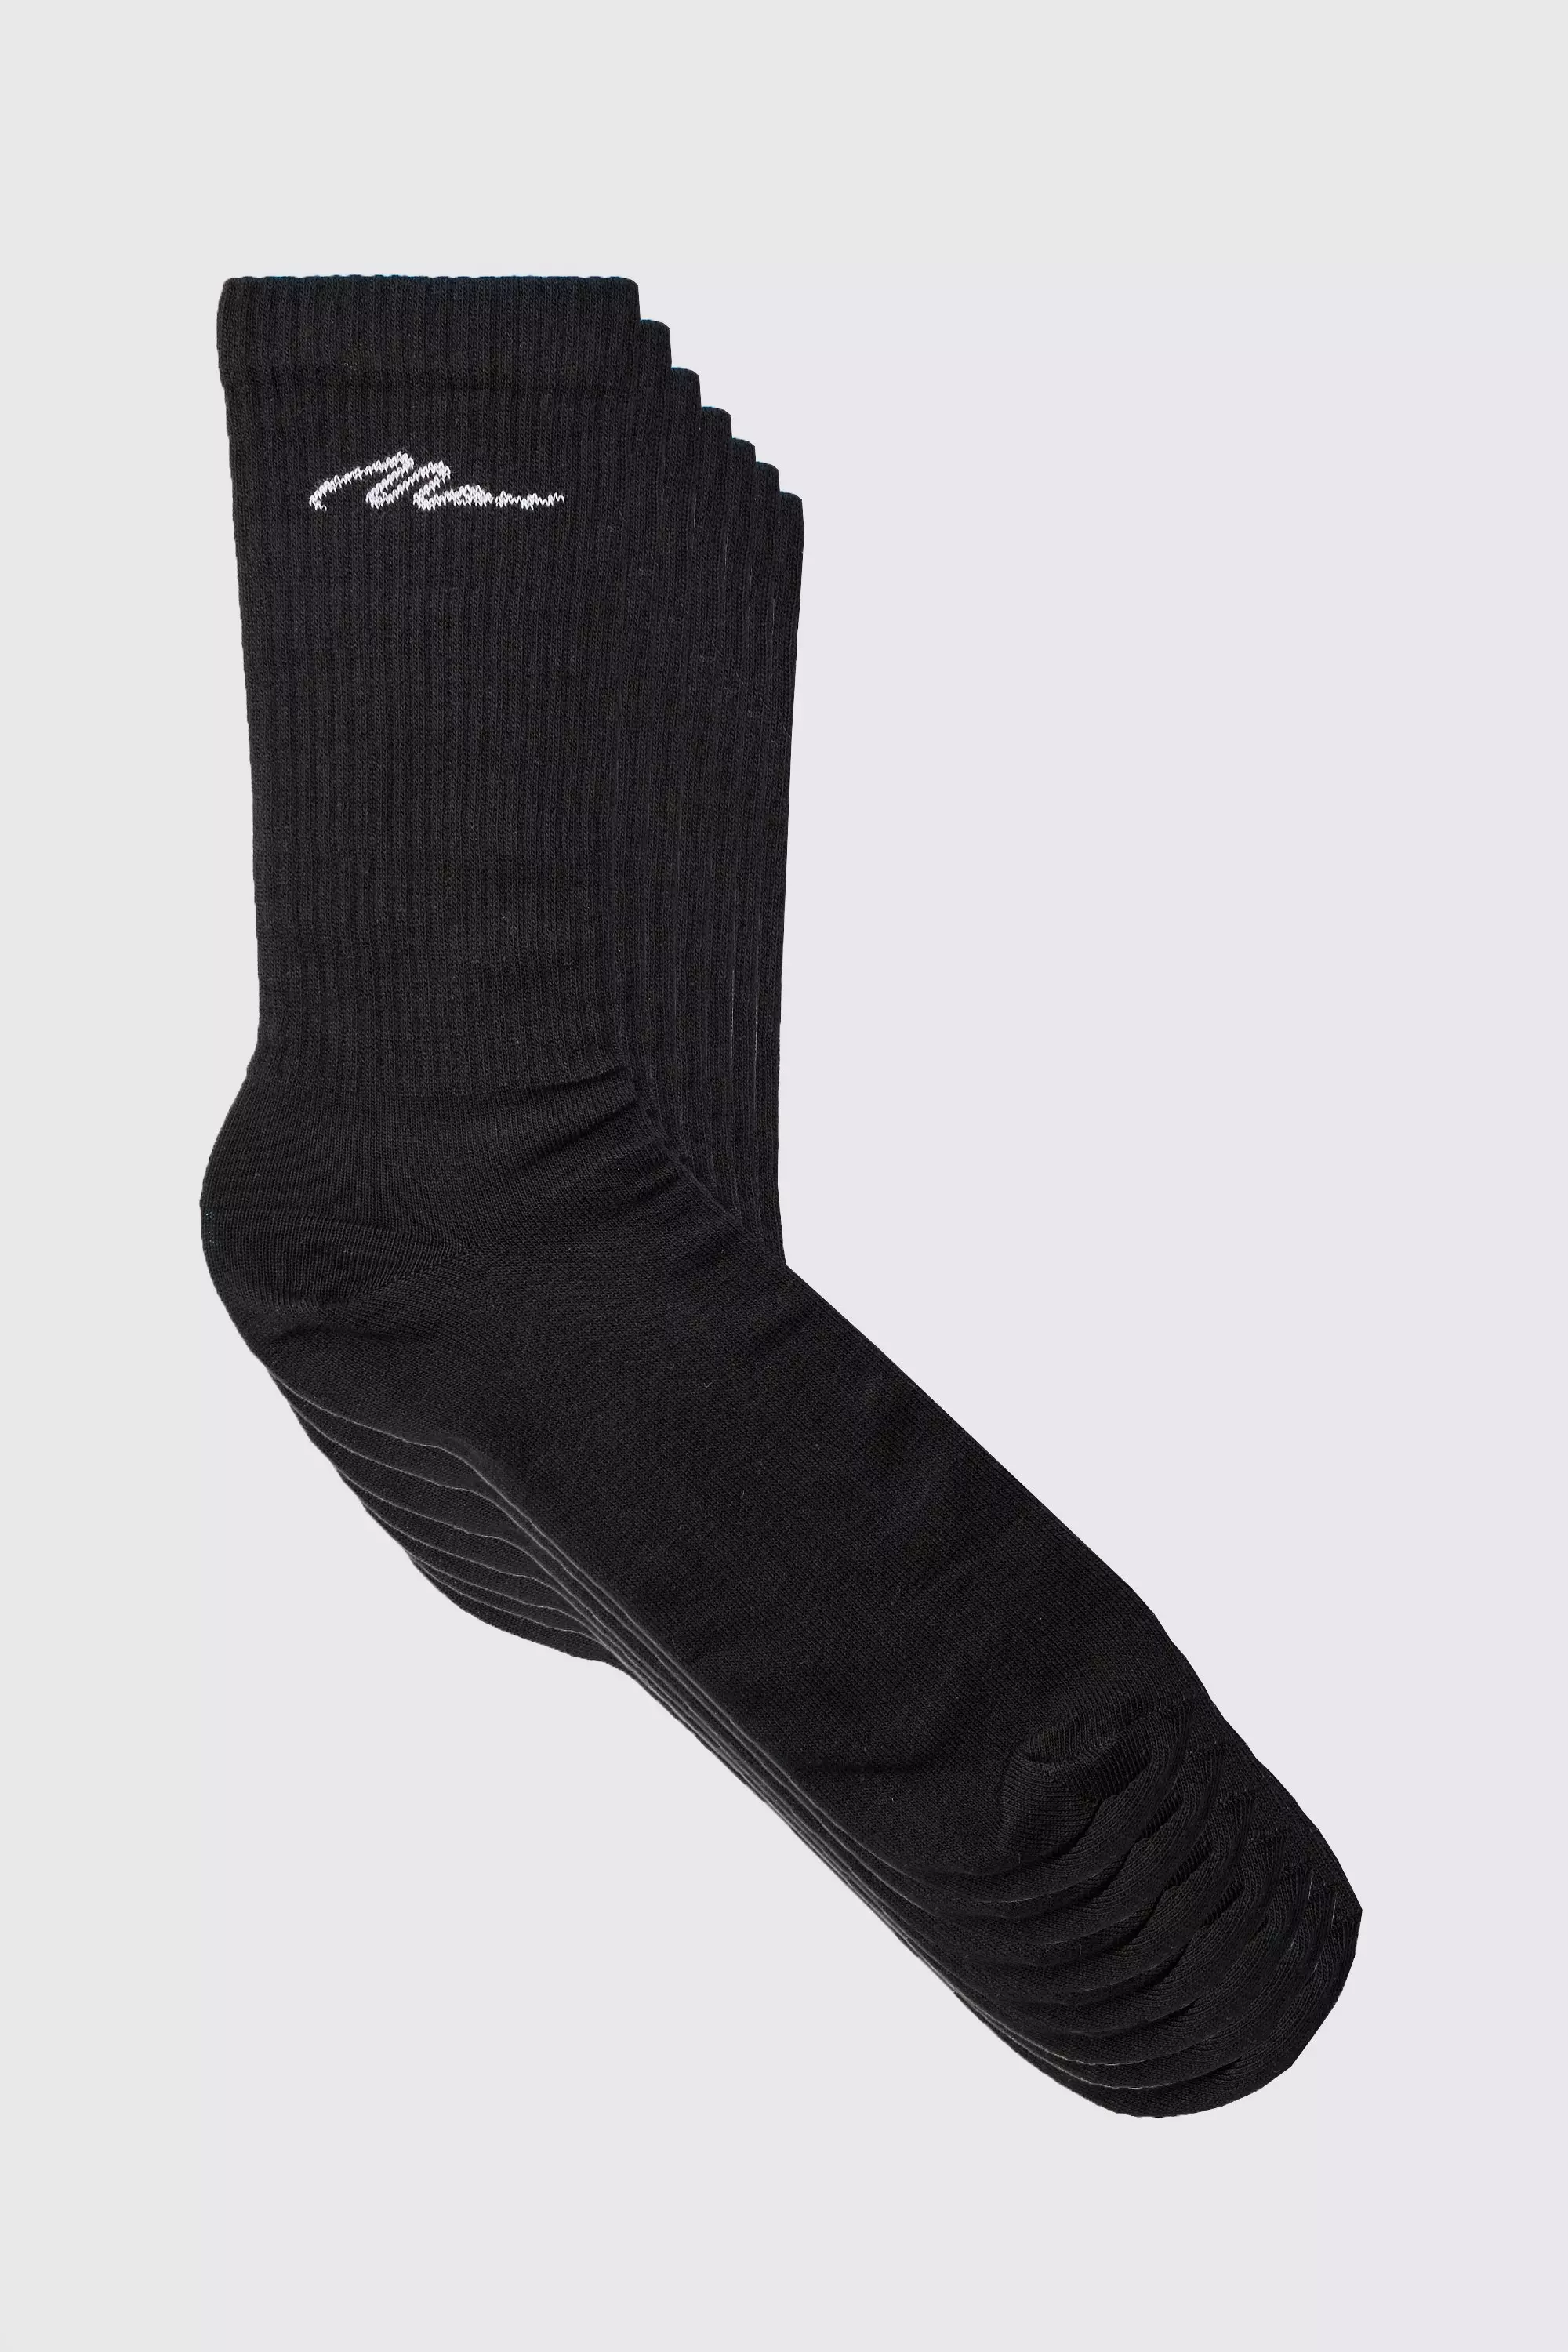 7 Pack Man Signature Sport Socks Black